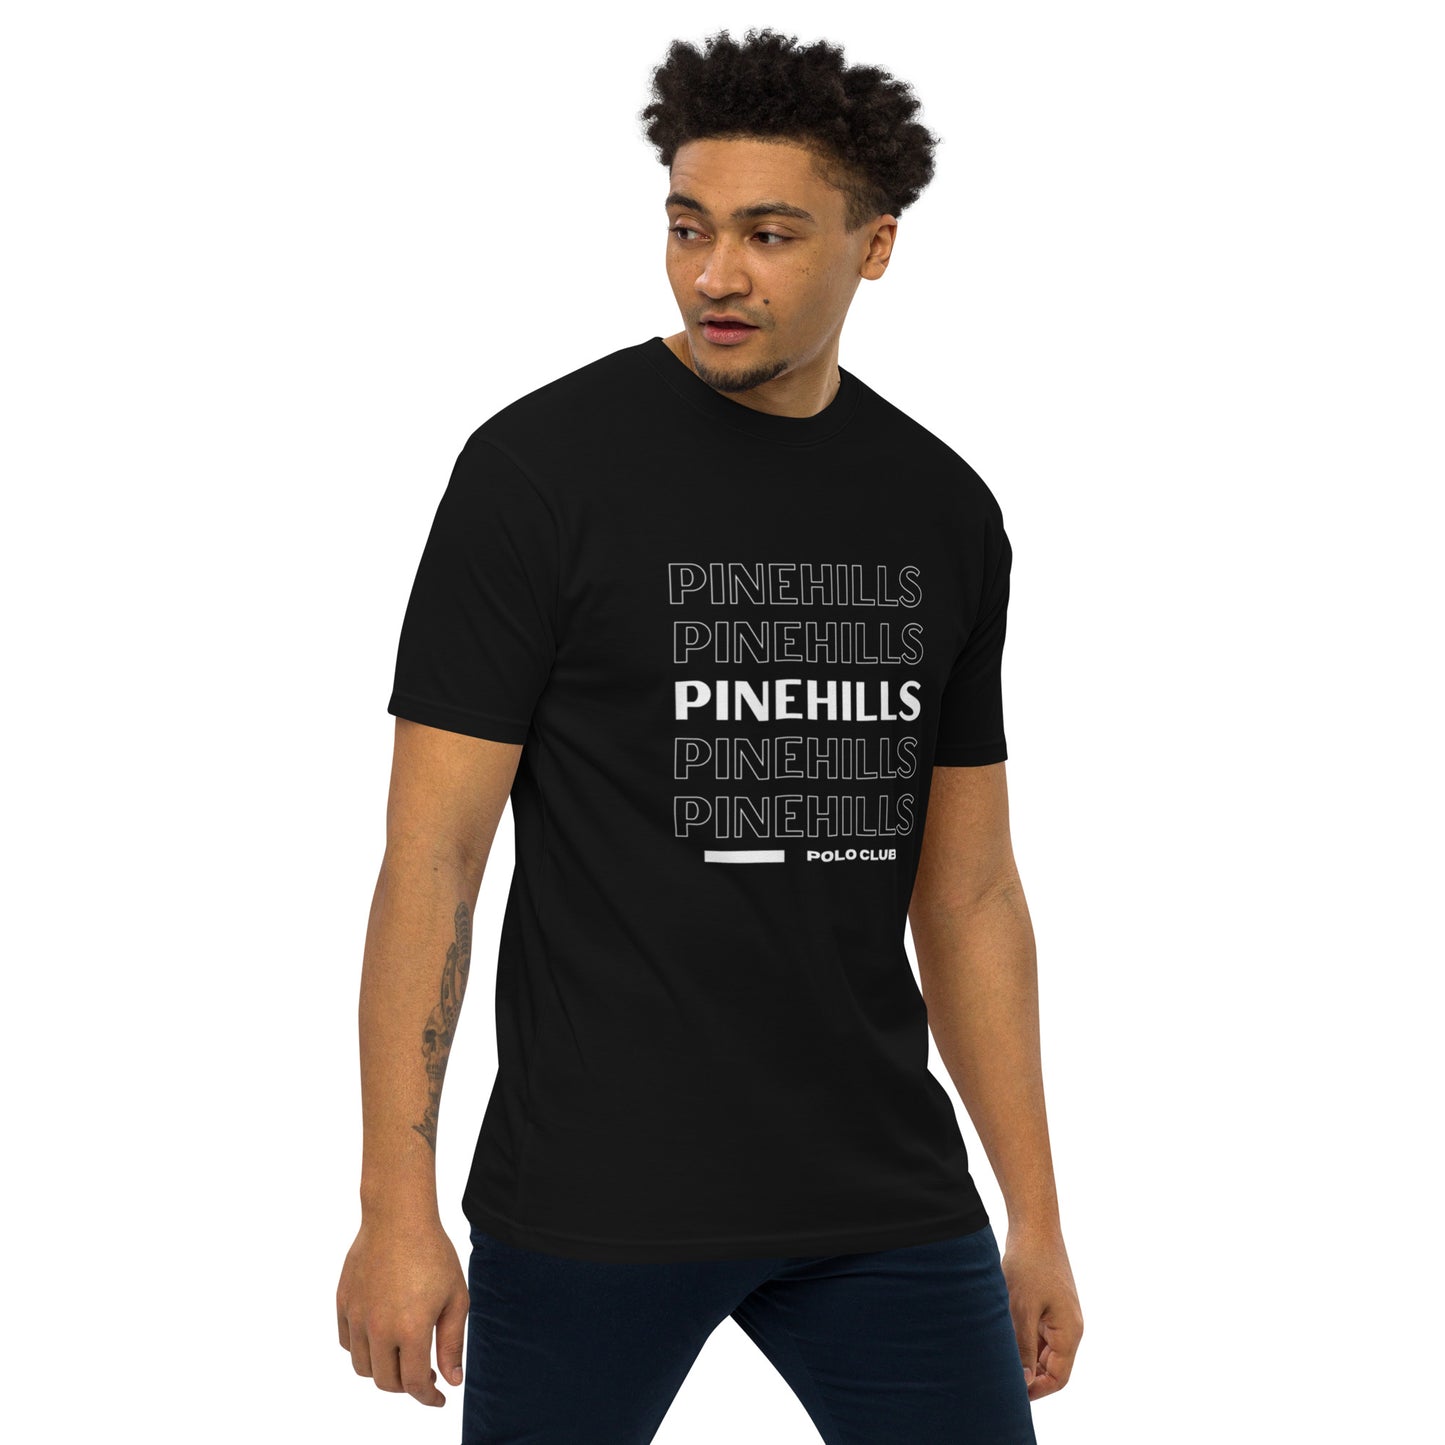 Men’s Premium heavyweight Pine Hills Tee